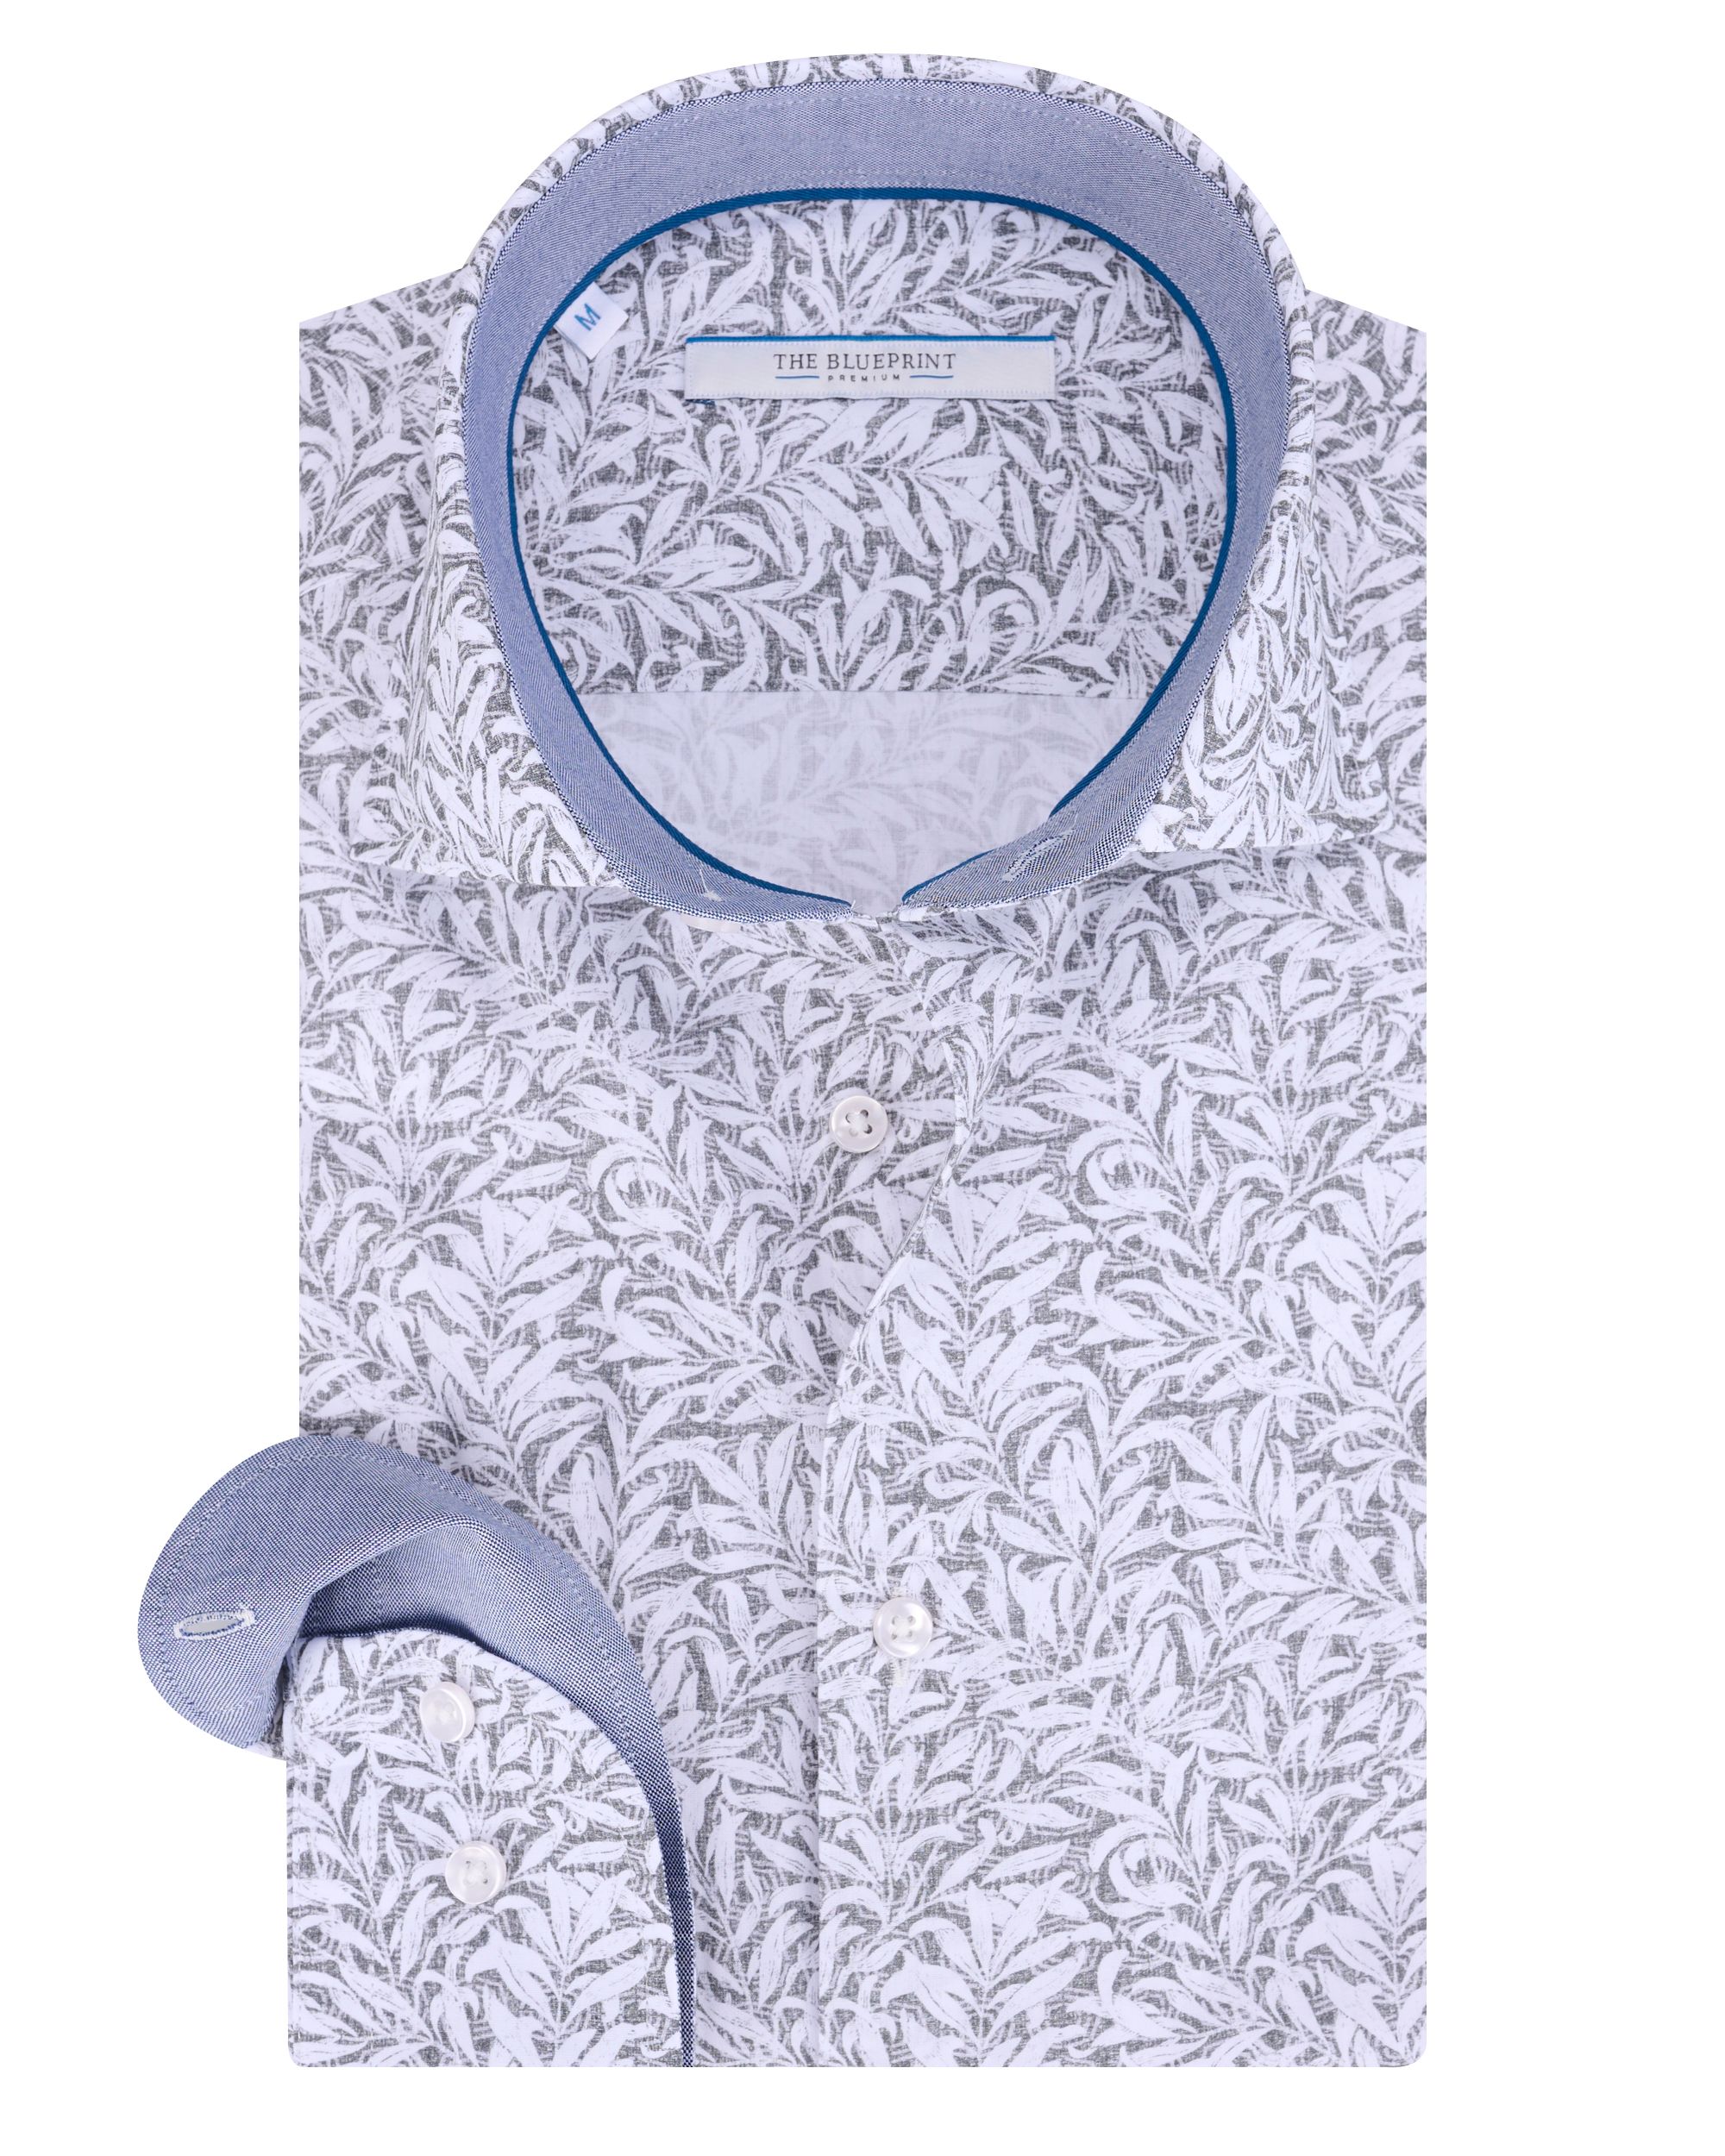 The BLUEPRINT Premium - Trendy overhemd LM Blauw dessin 086651-001-L